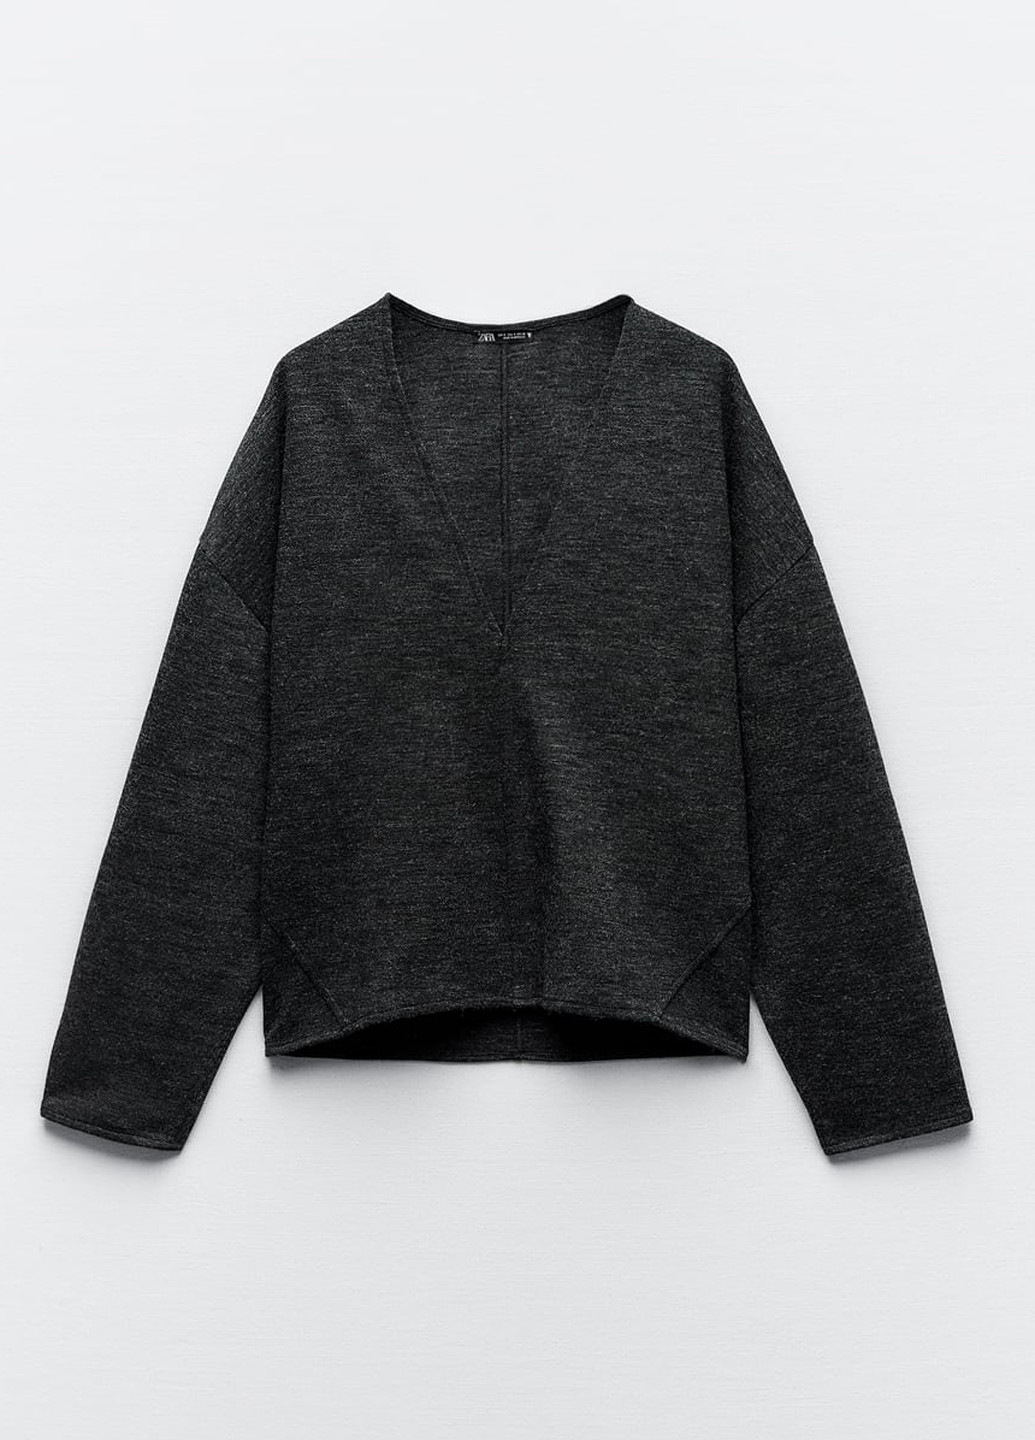 Серый демисезонный пуловер пуловер Zara